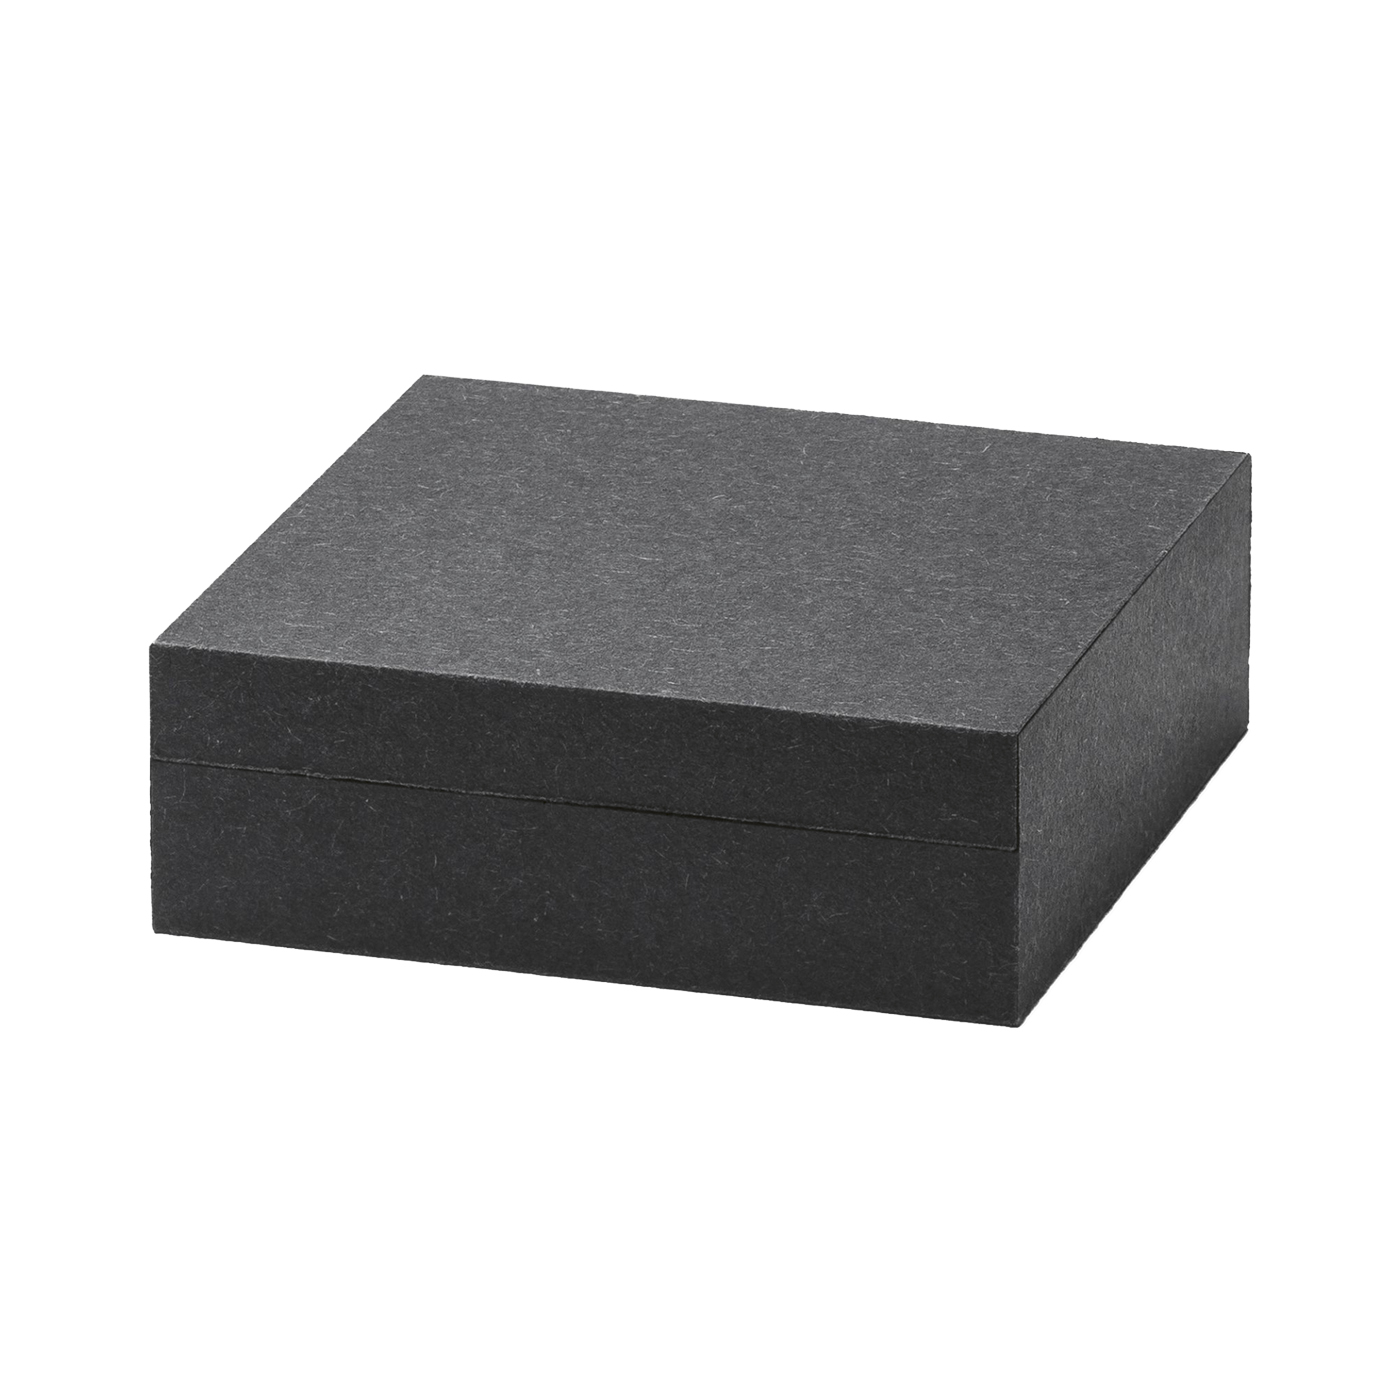 PICA-Design Schmucketui "Flatline Box", 60 x 60 x 20 mm - 1 Stück